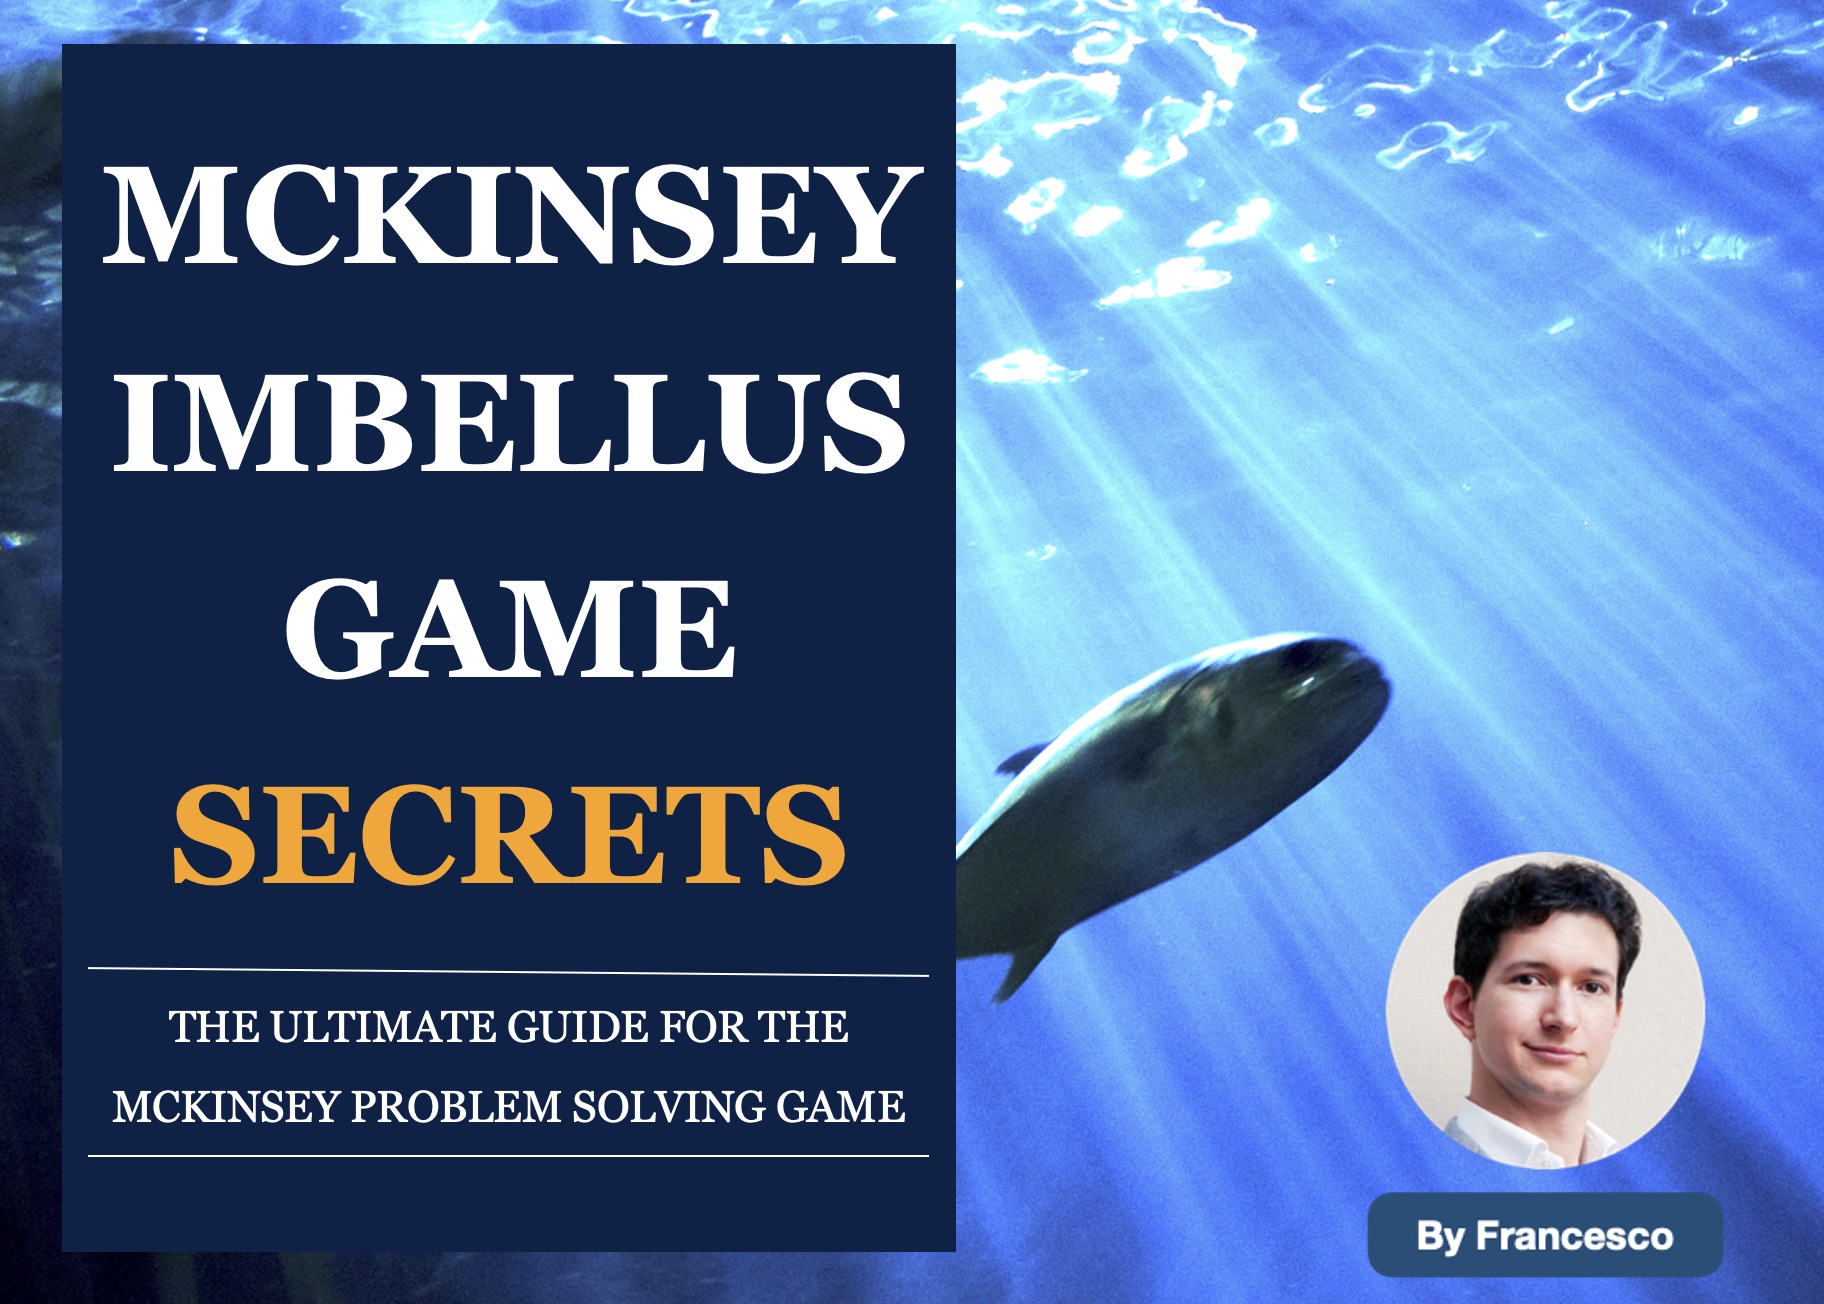 McKinsey Imbellus Problem Solving Game Guide